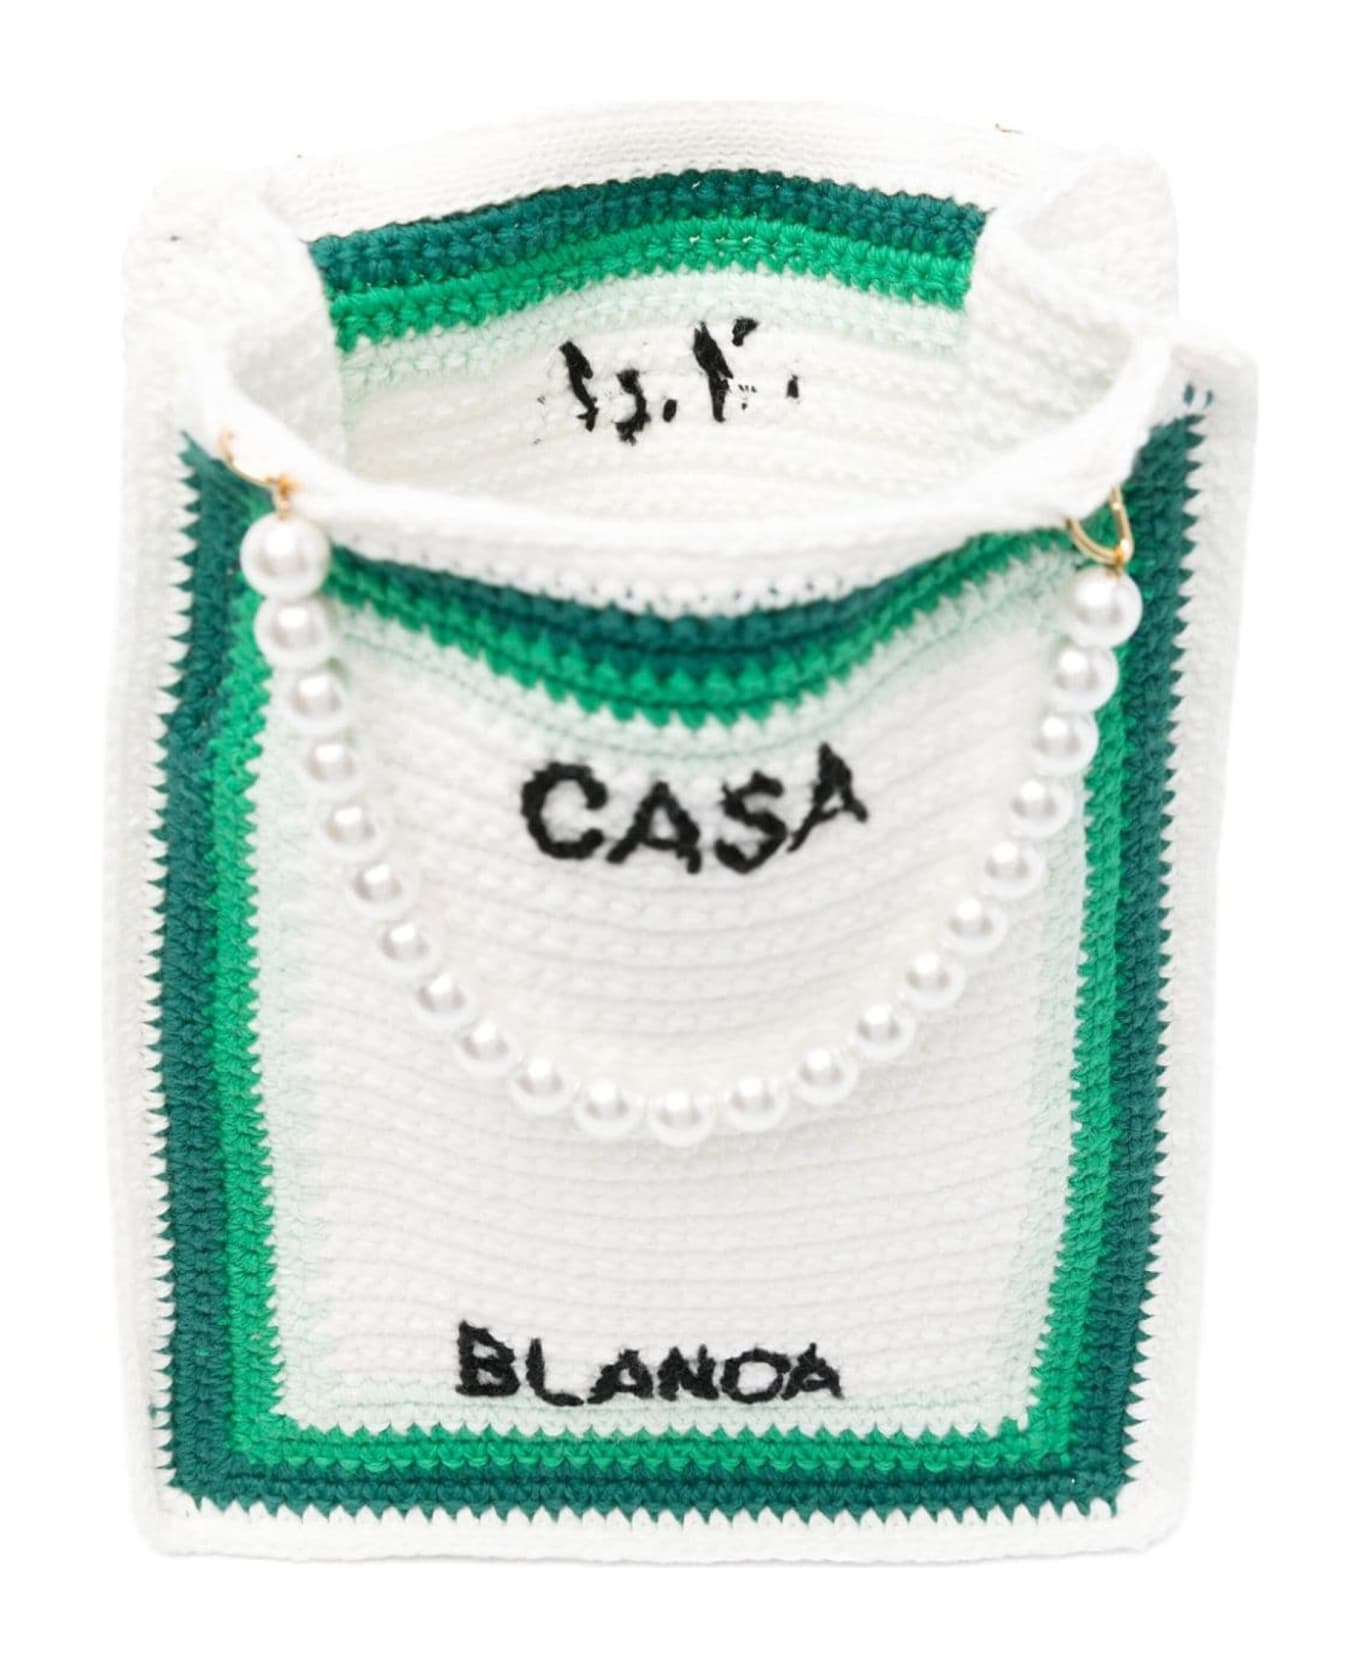 Casablanca White And Green Cotton Tote Bag - Neutro